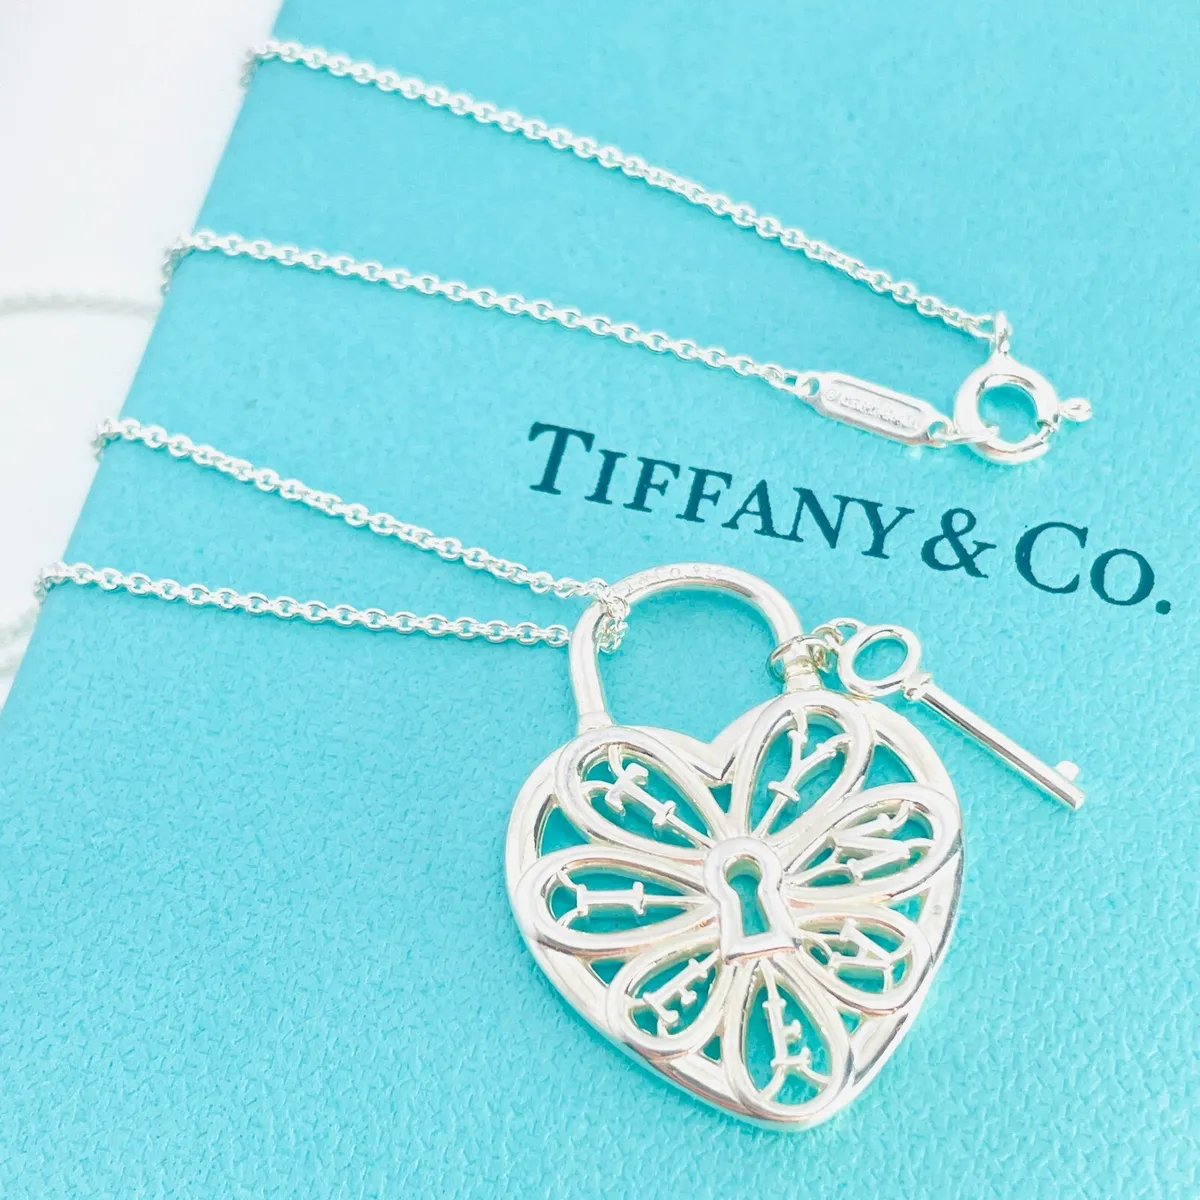 Tiffany & Co.Heart & Key Filigree Pendant Necklace Sterling Silver 925  W/Pouch